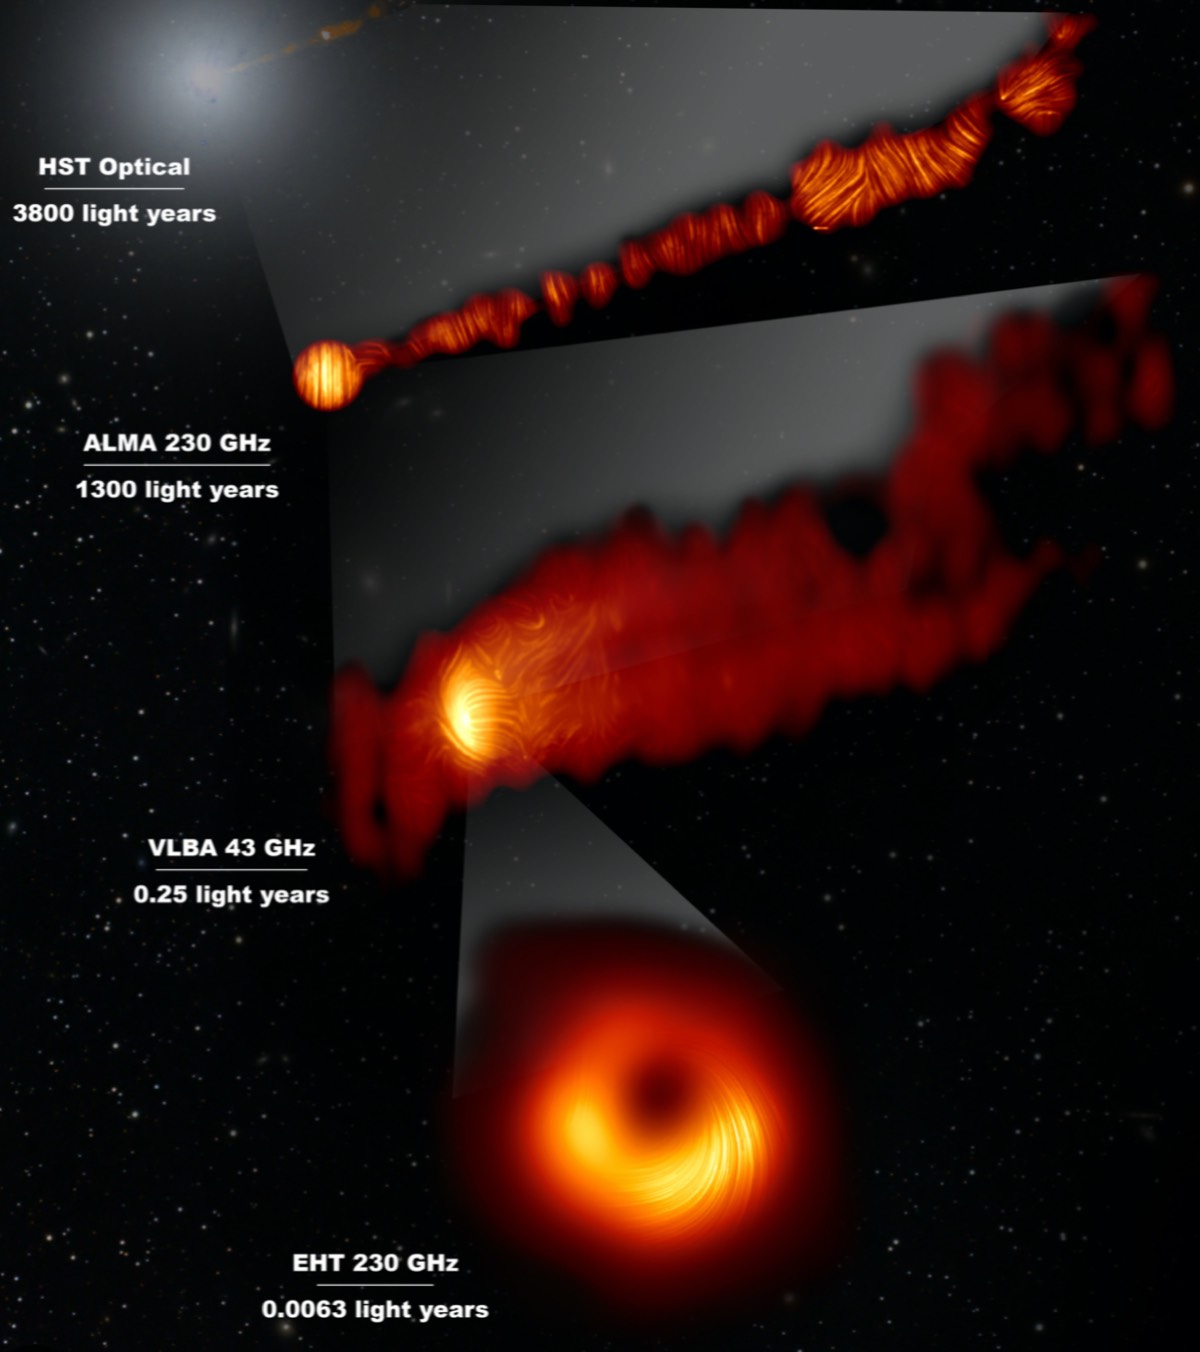 event horizon telescope full black hole image